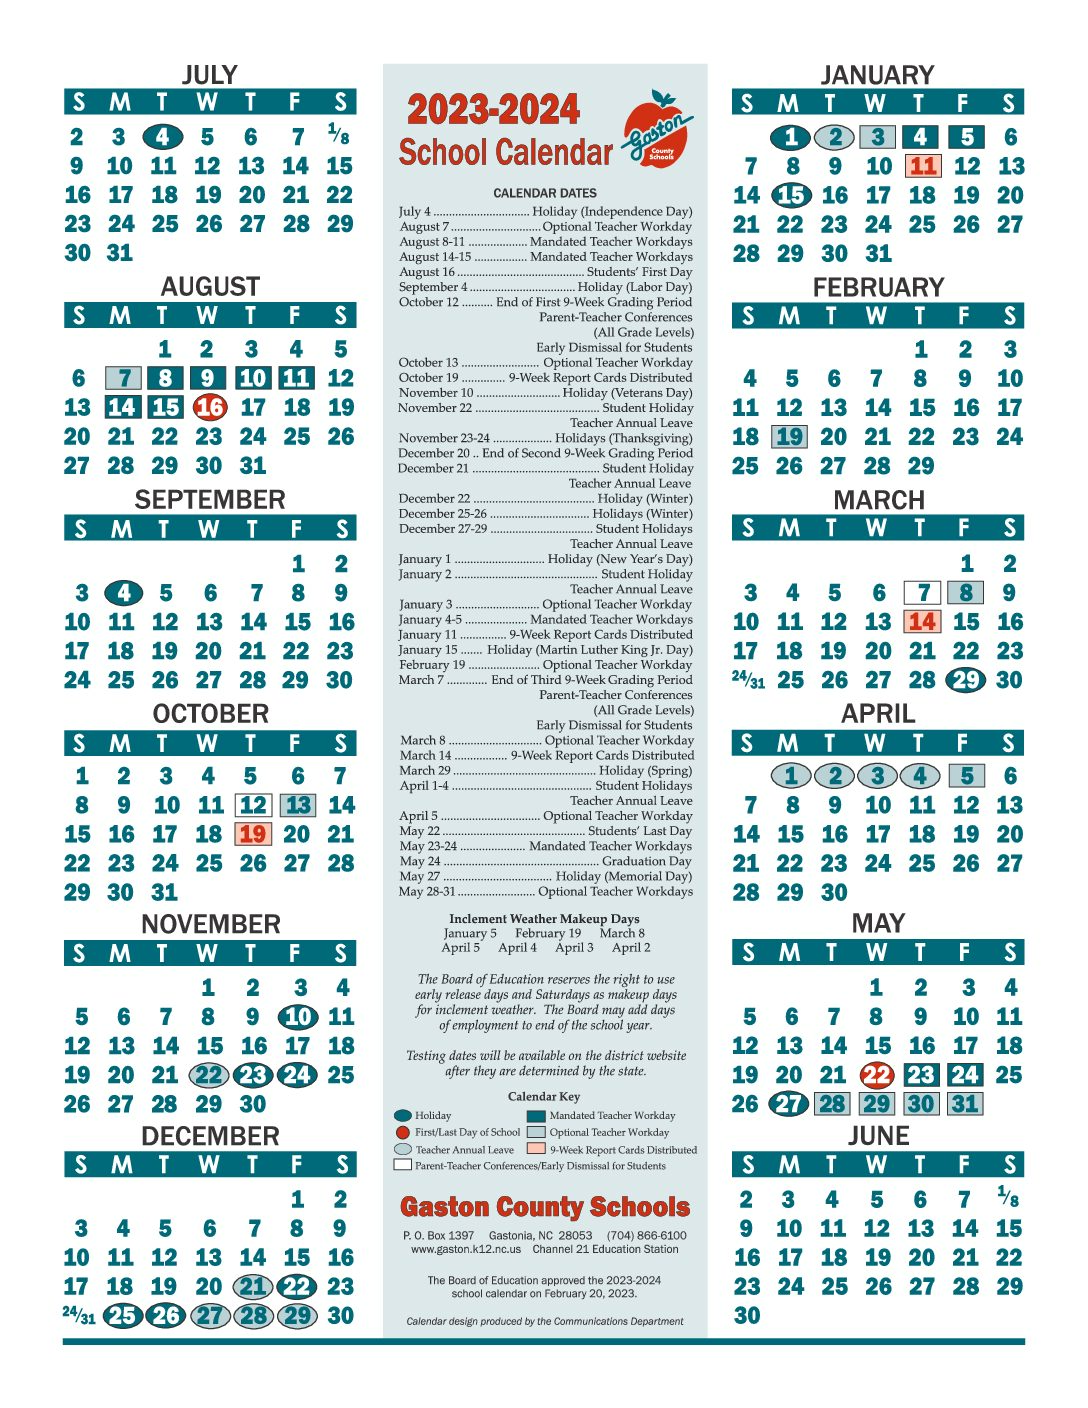 Gaston County Schools Calendar 2023 2024 In PDF